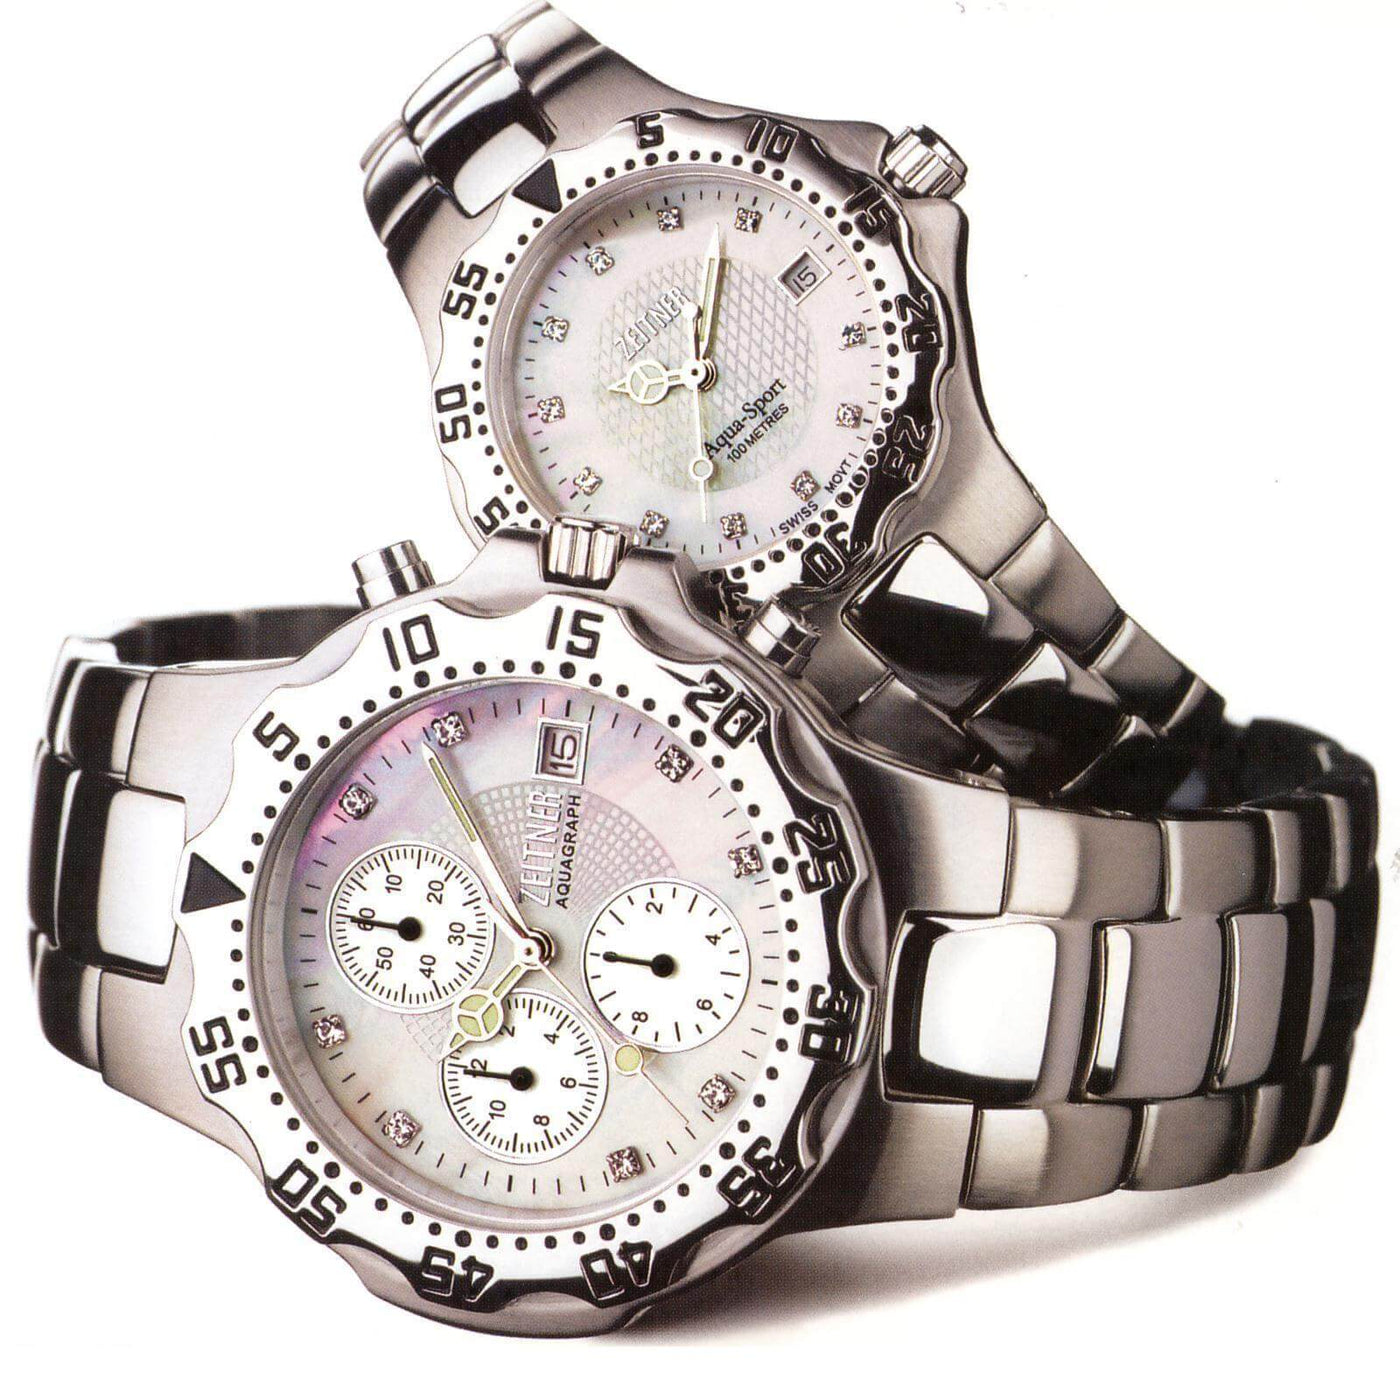 Aquagraph Steel Diamond Men's Watch